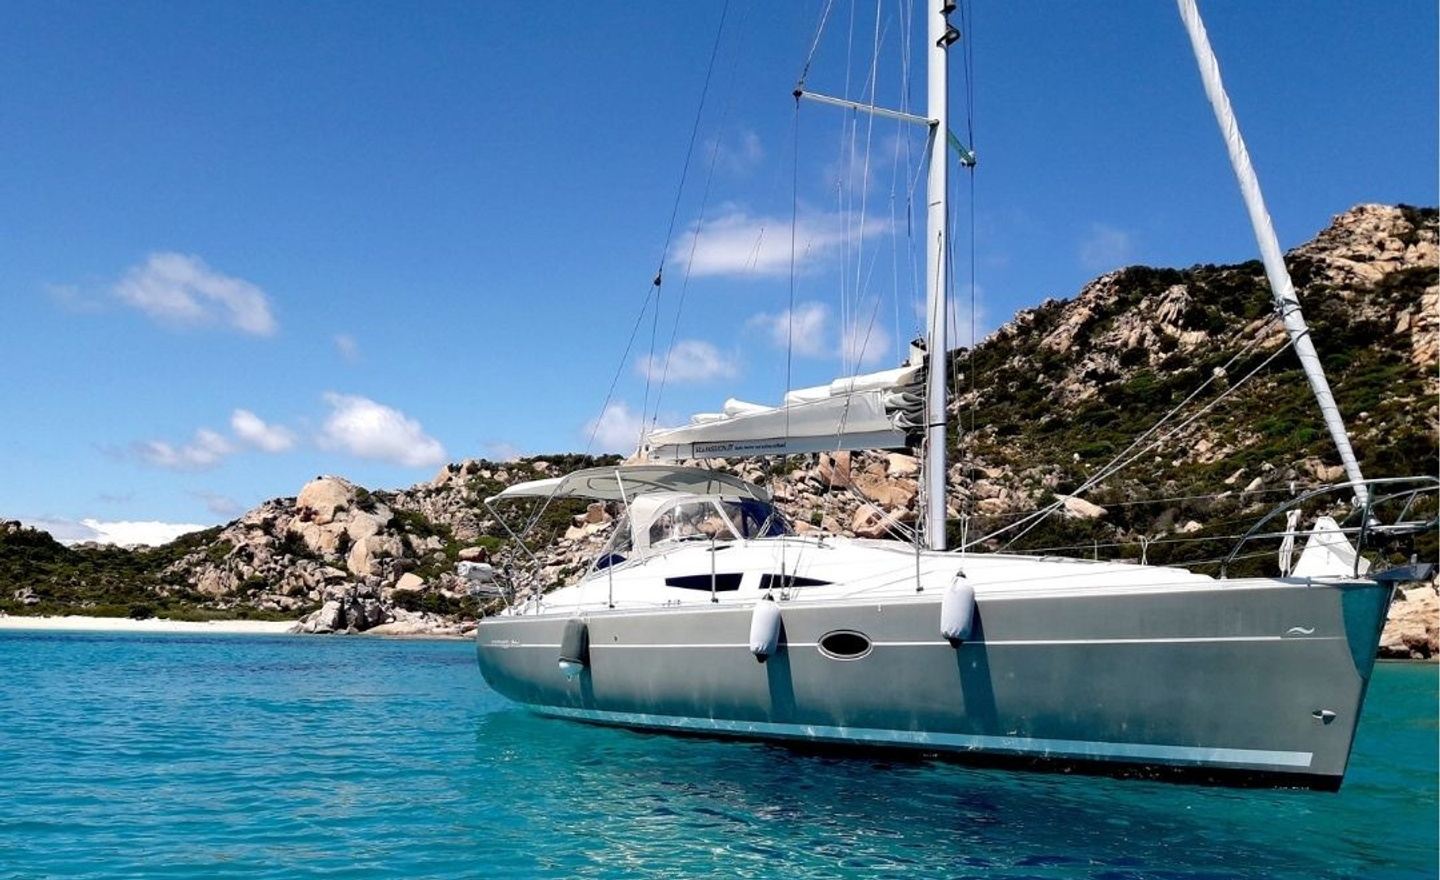 Sardinia day trip - Maddalena archipelago by boat